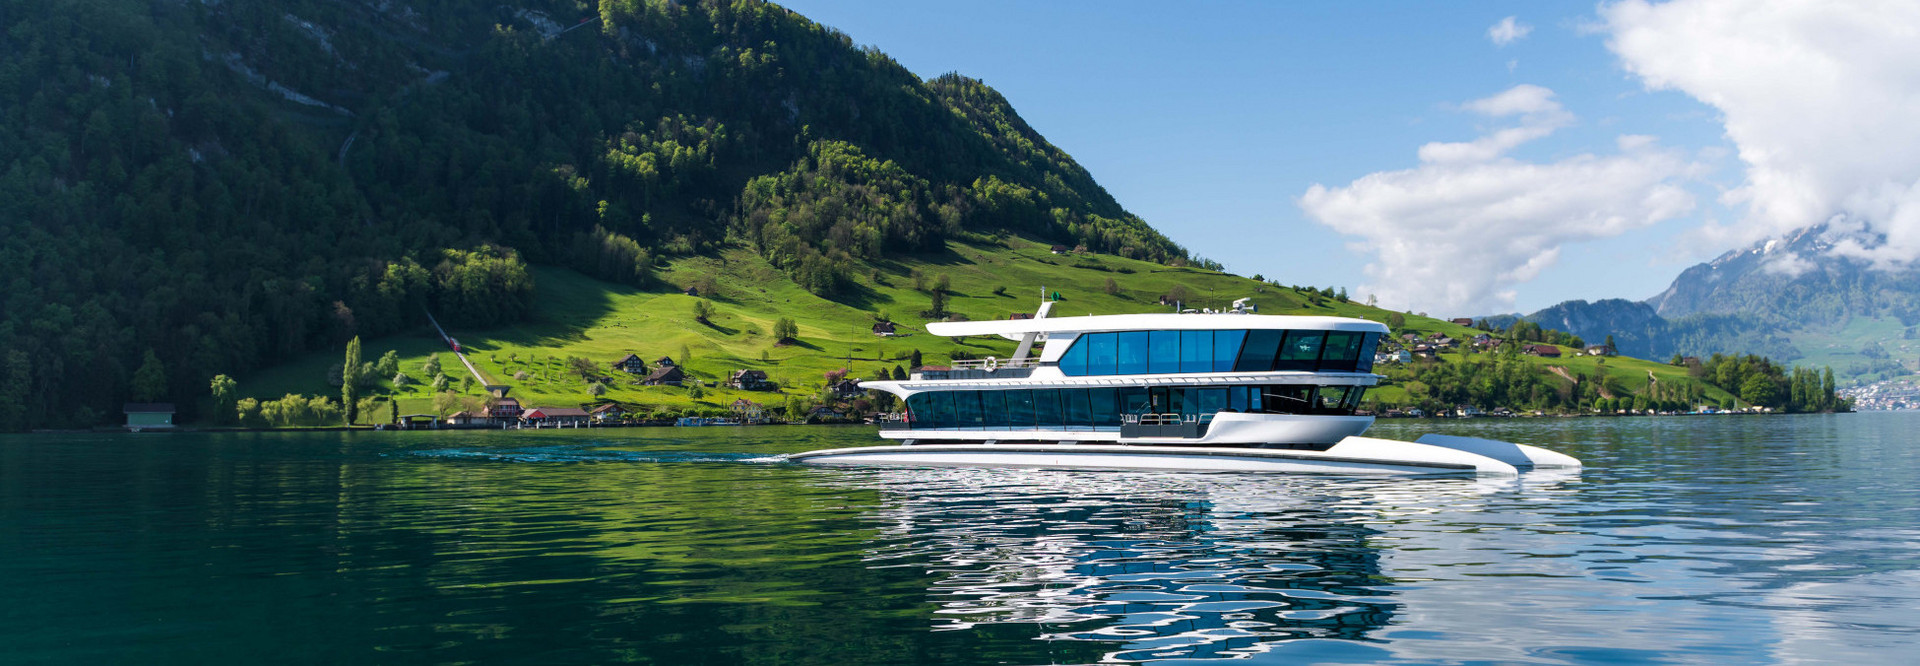 The motor vessel Bürgenstock sails for Lucerne on a beautiful summer day.